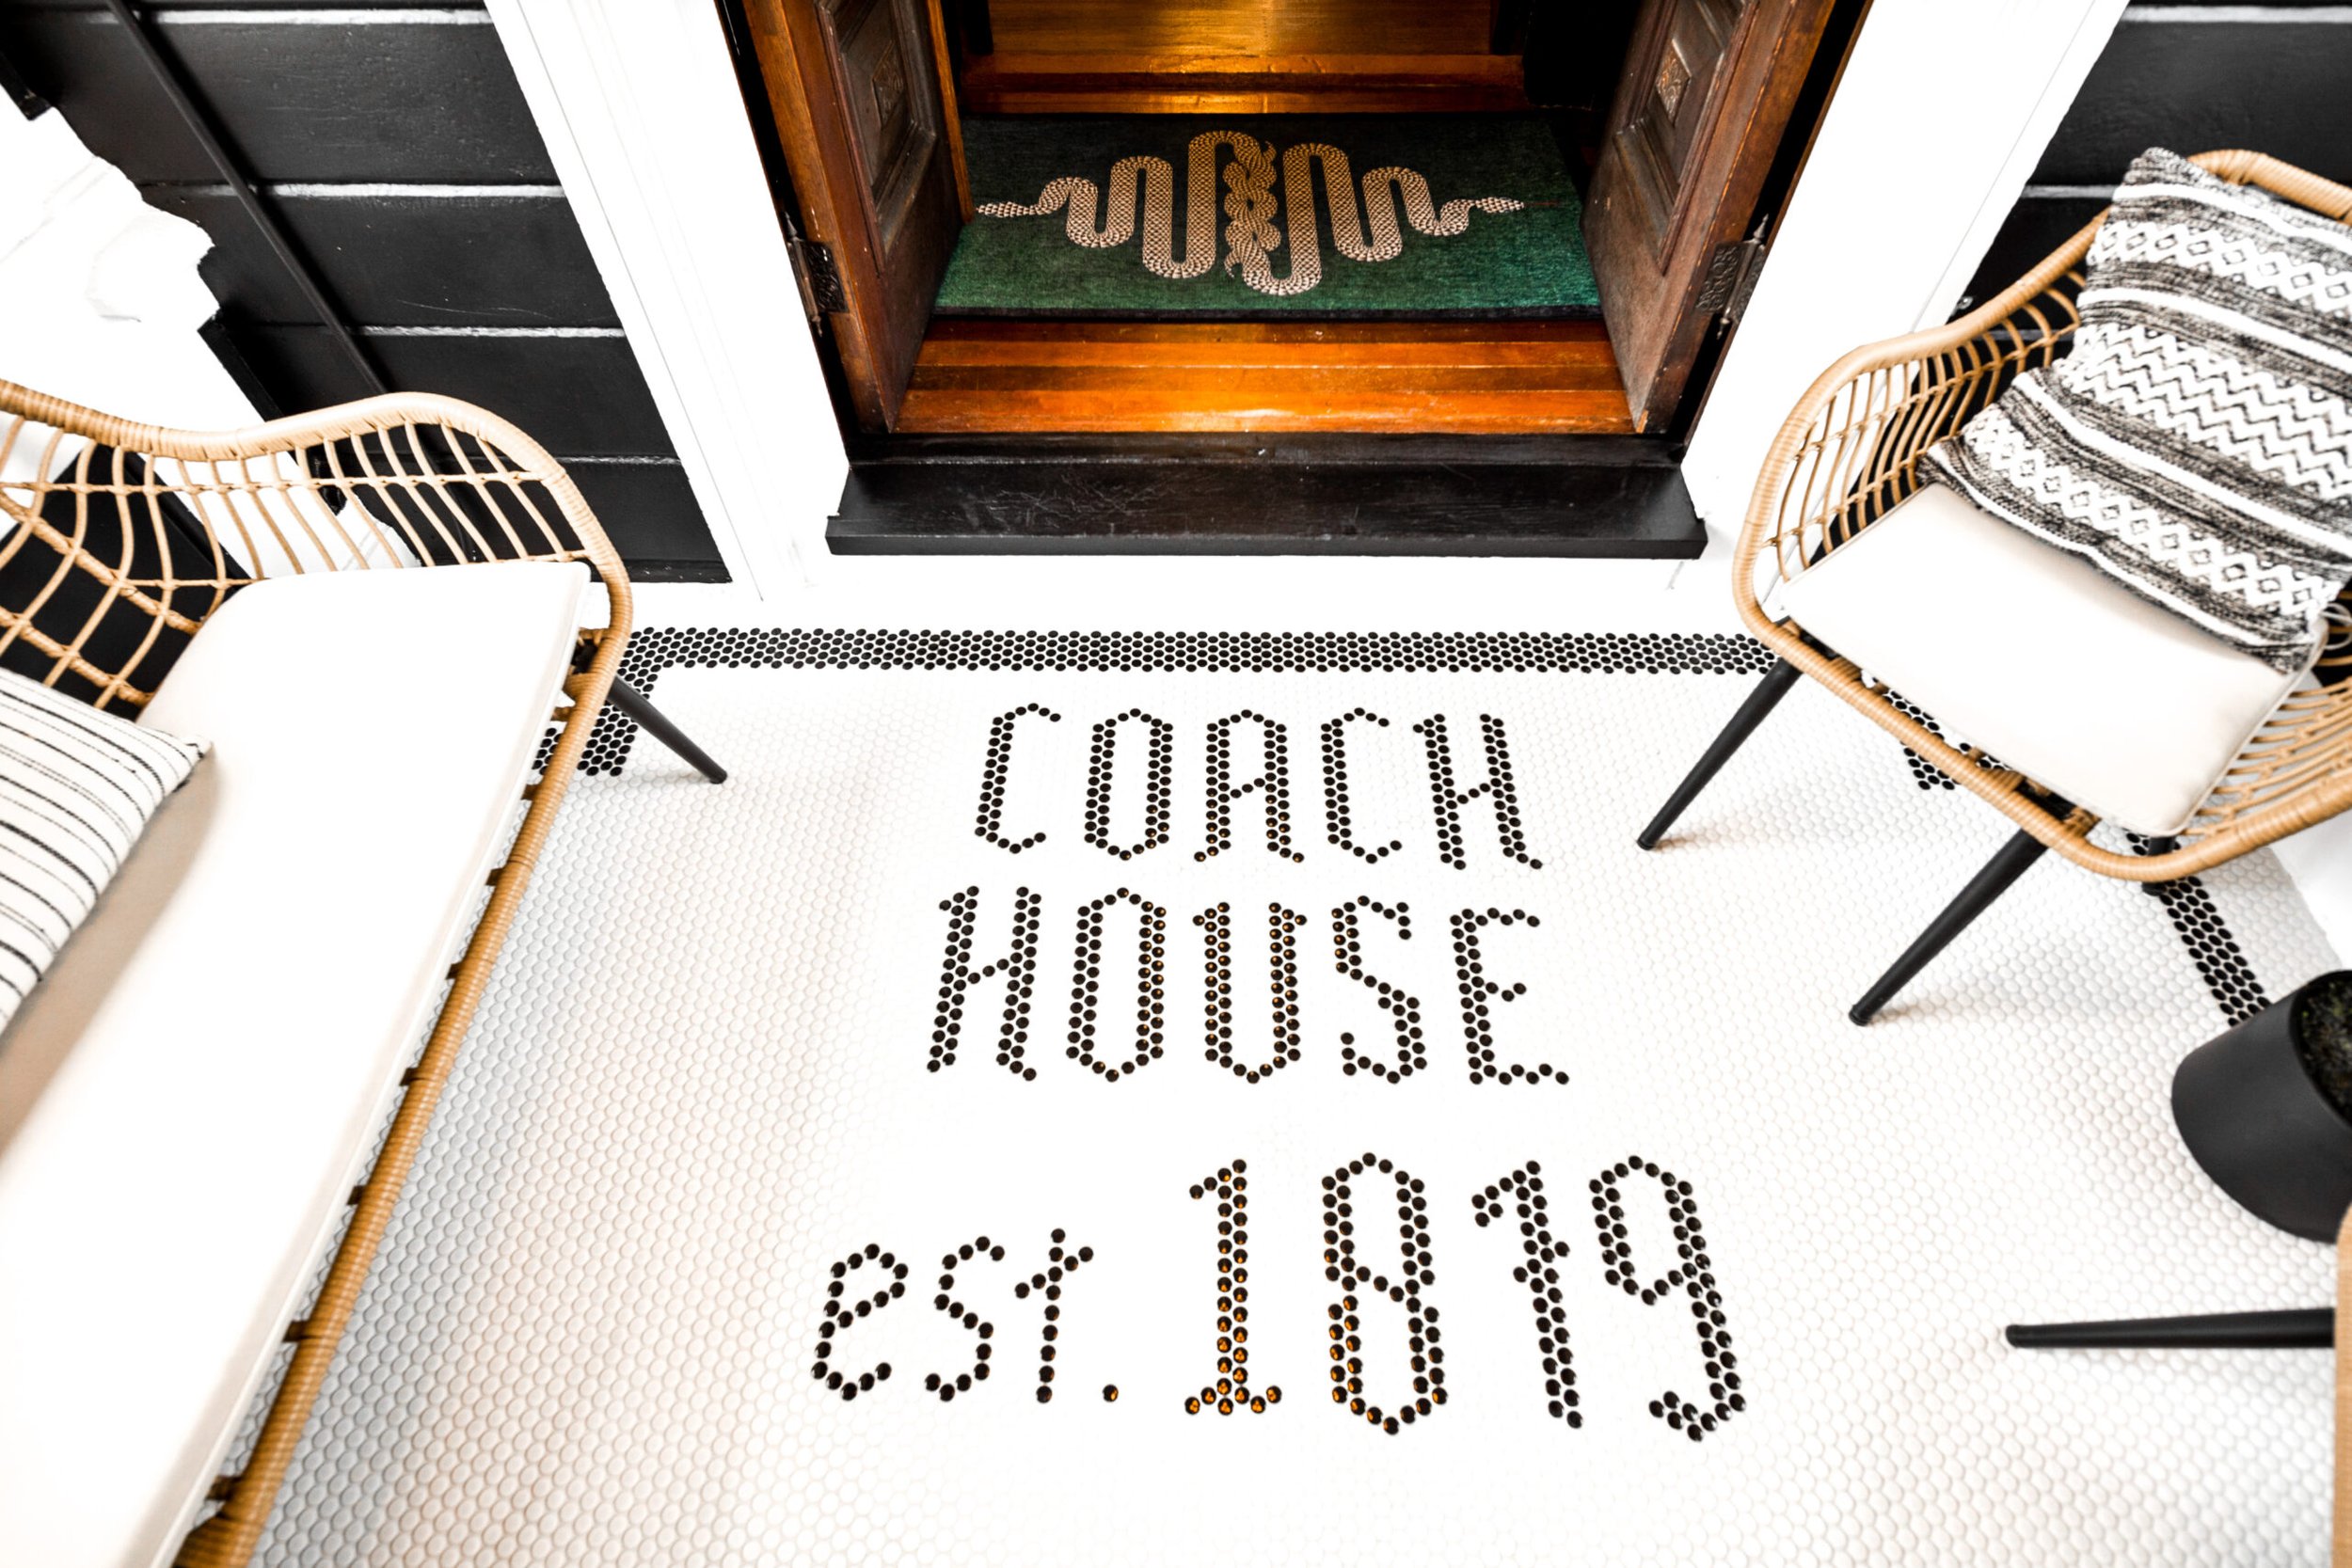 Coach-House-Tile-Entrance-scaled.jpeg